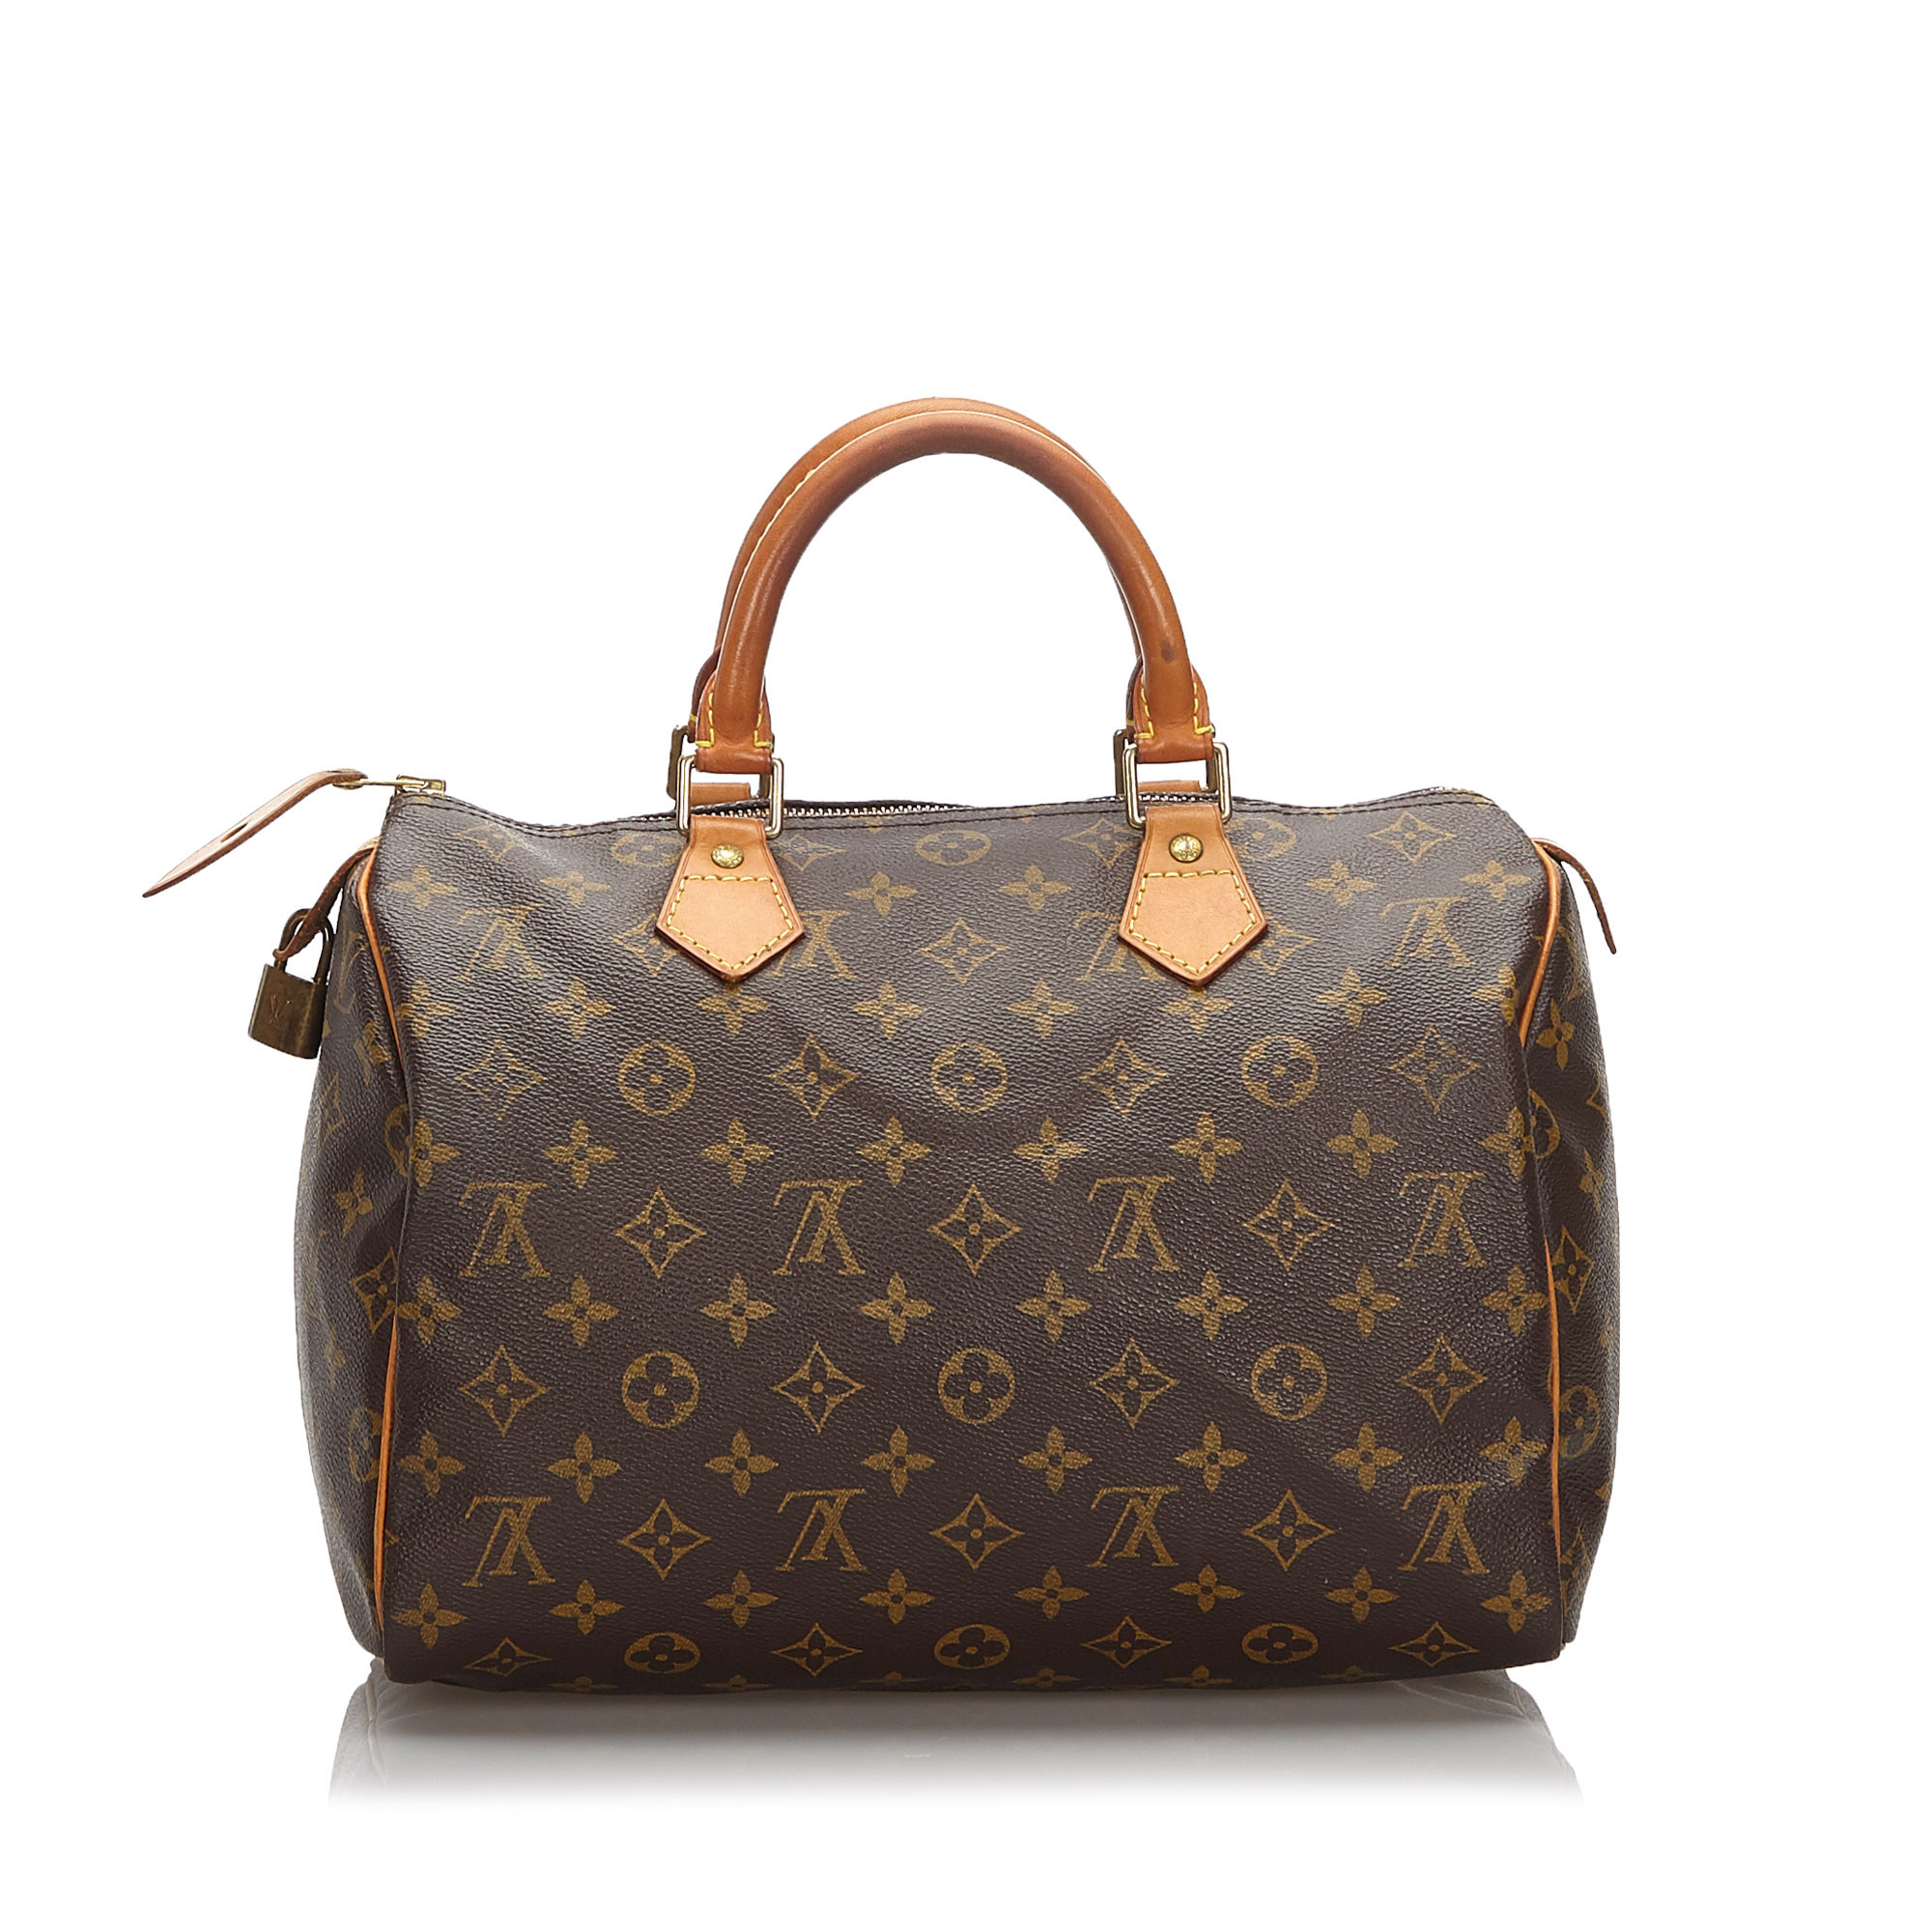 Louis Vuitton Monogram Speedy 30 Bag - Image 2 of 9